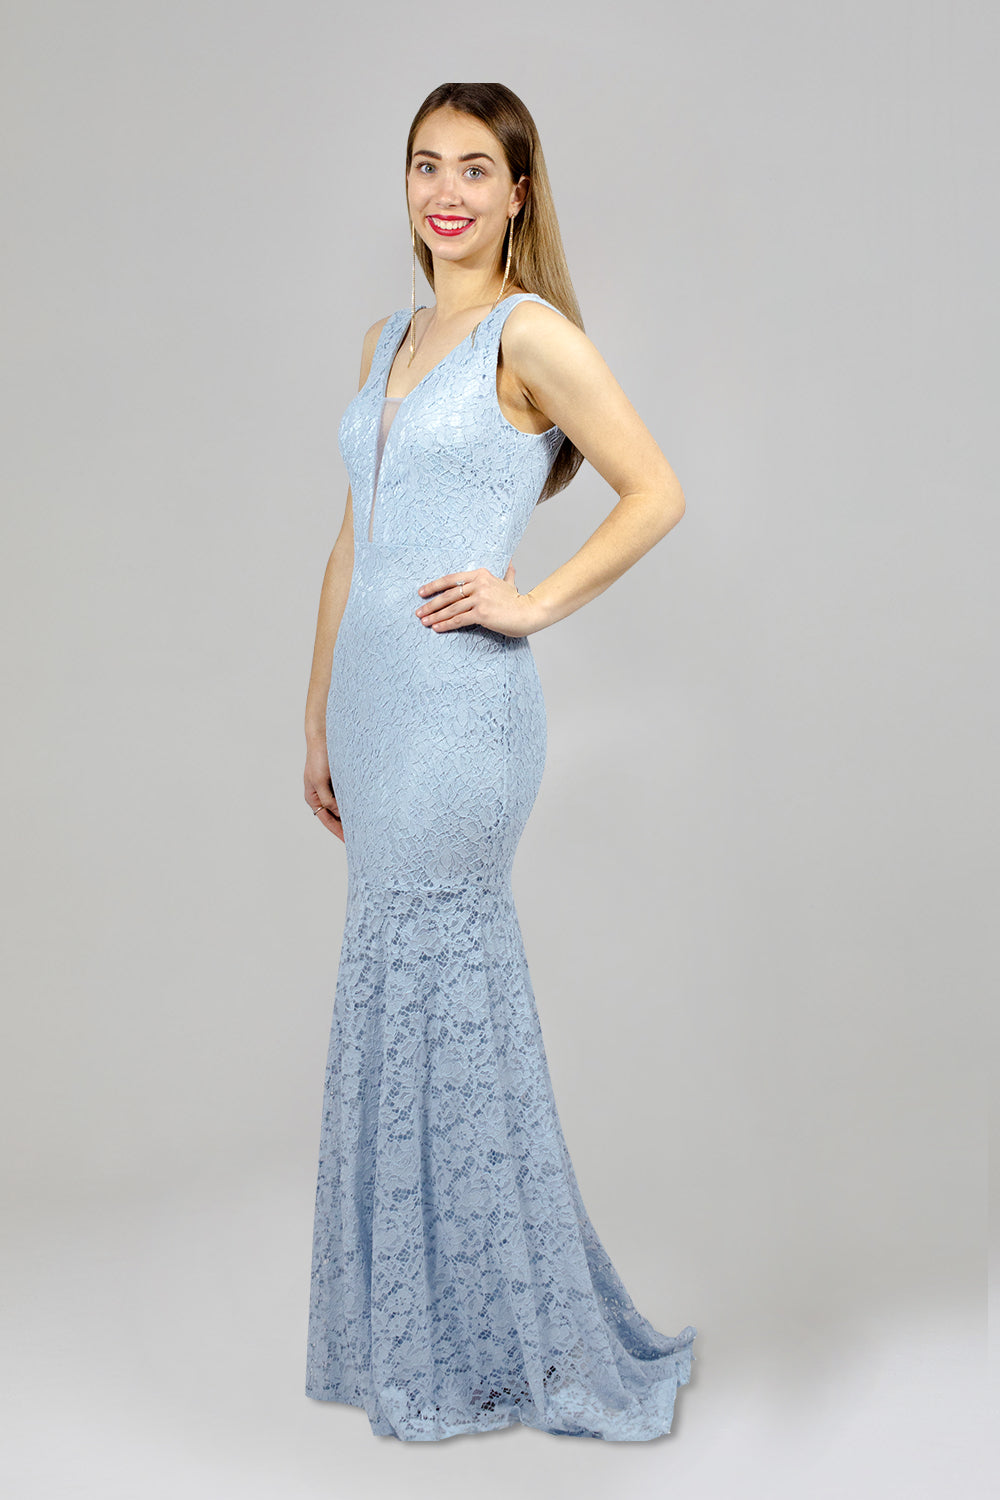 blue lace bridesmaid dresses perth australia online envious bridal & formal